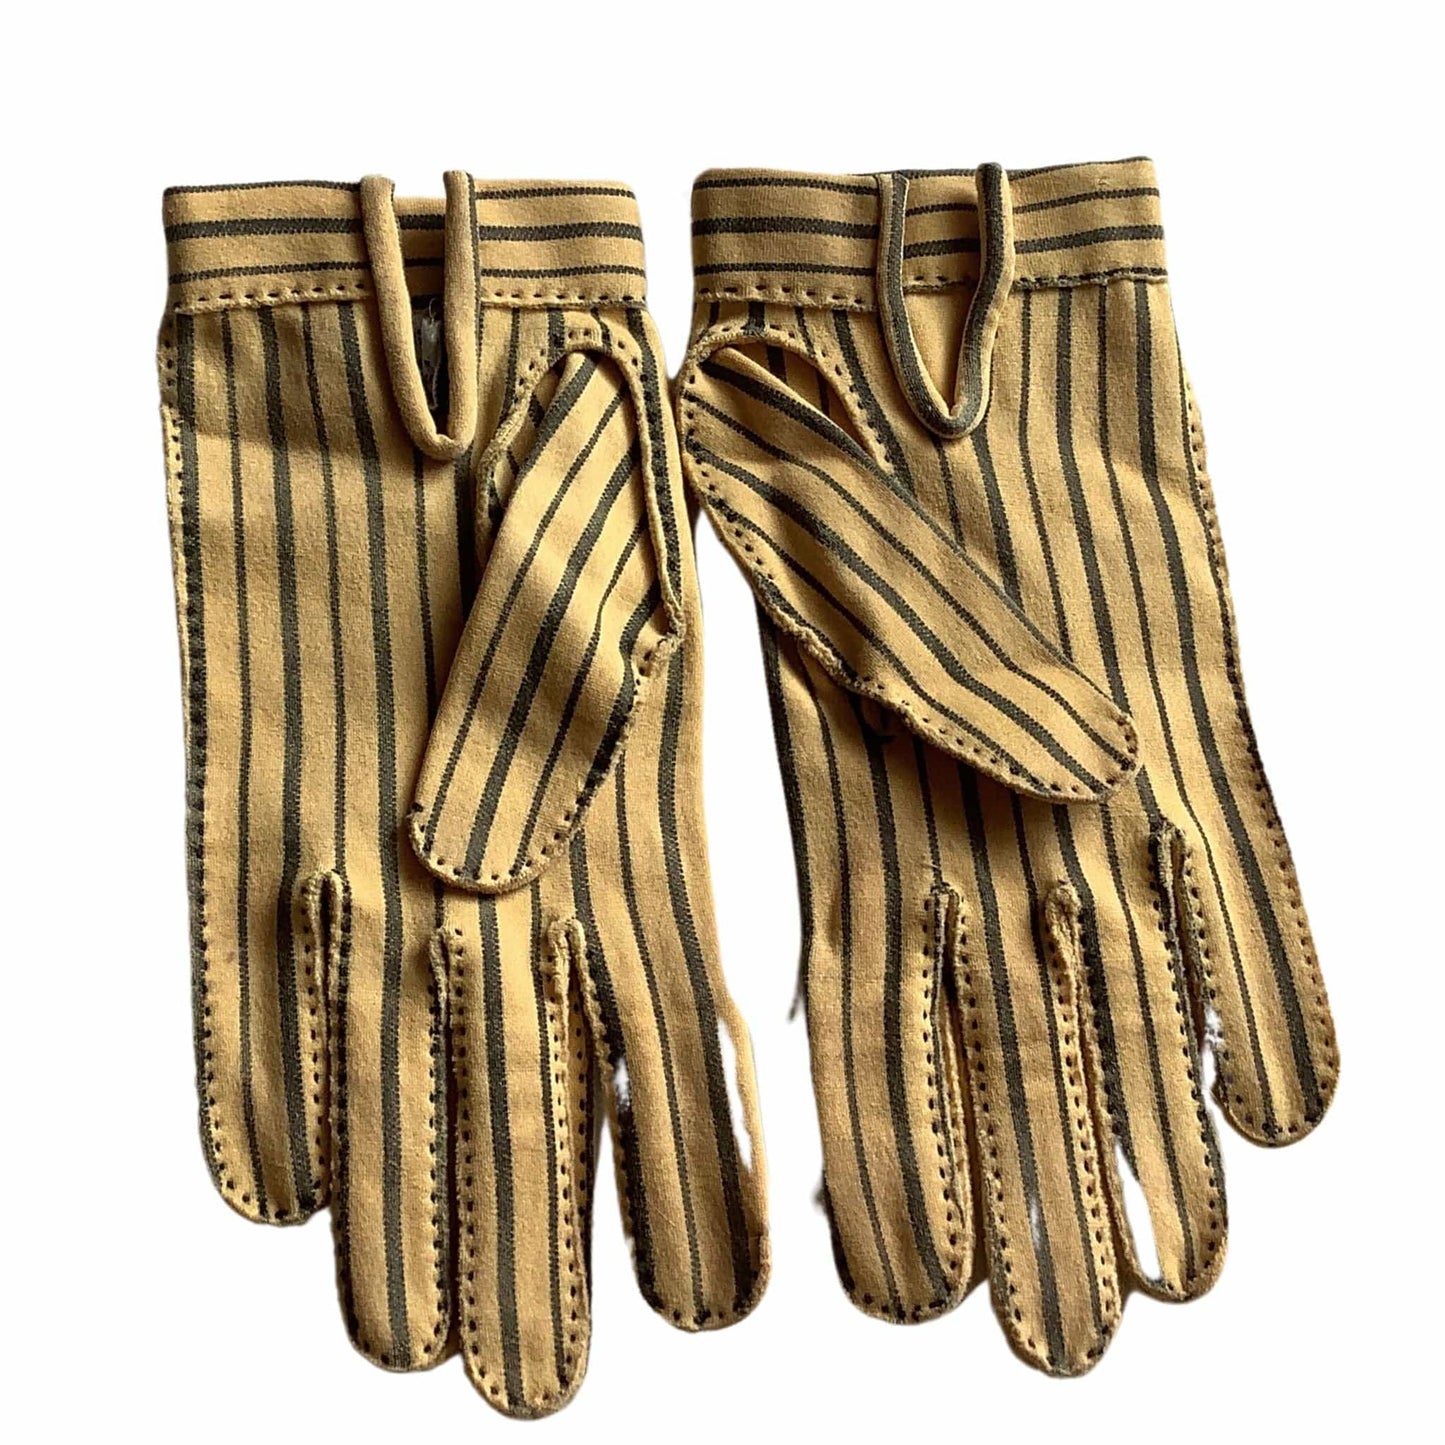 Le Gant Hermes Gloves 6 / Multi / Vintage 1960s